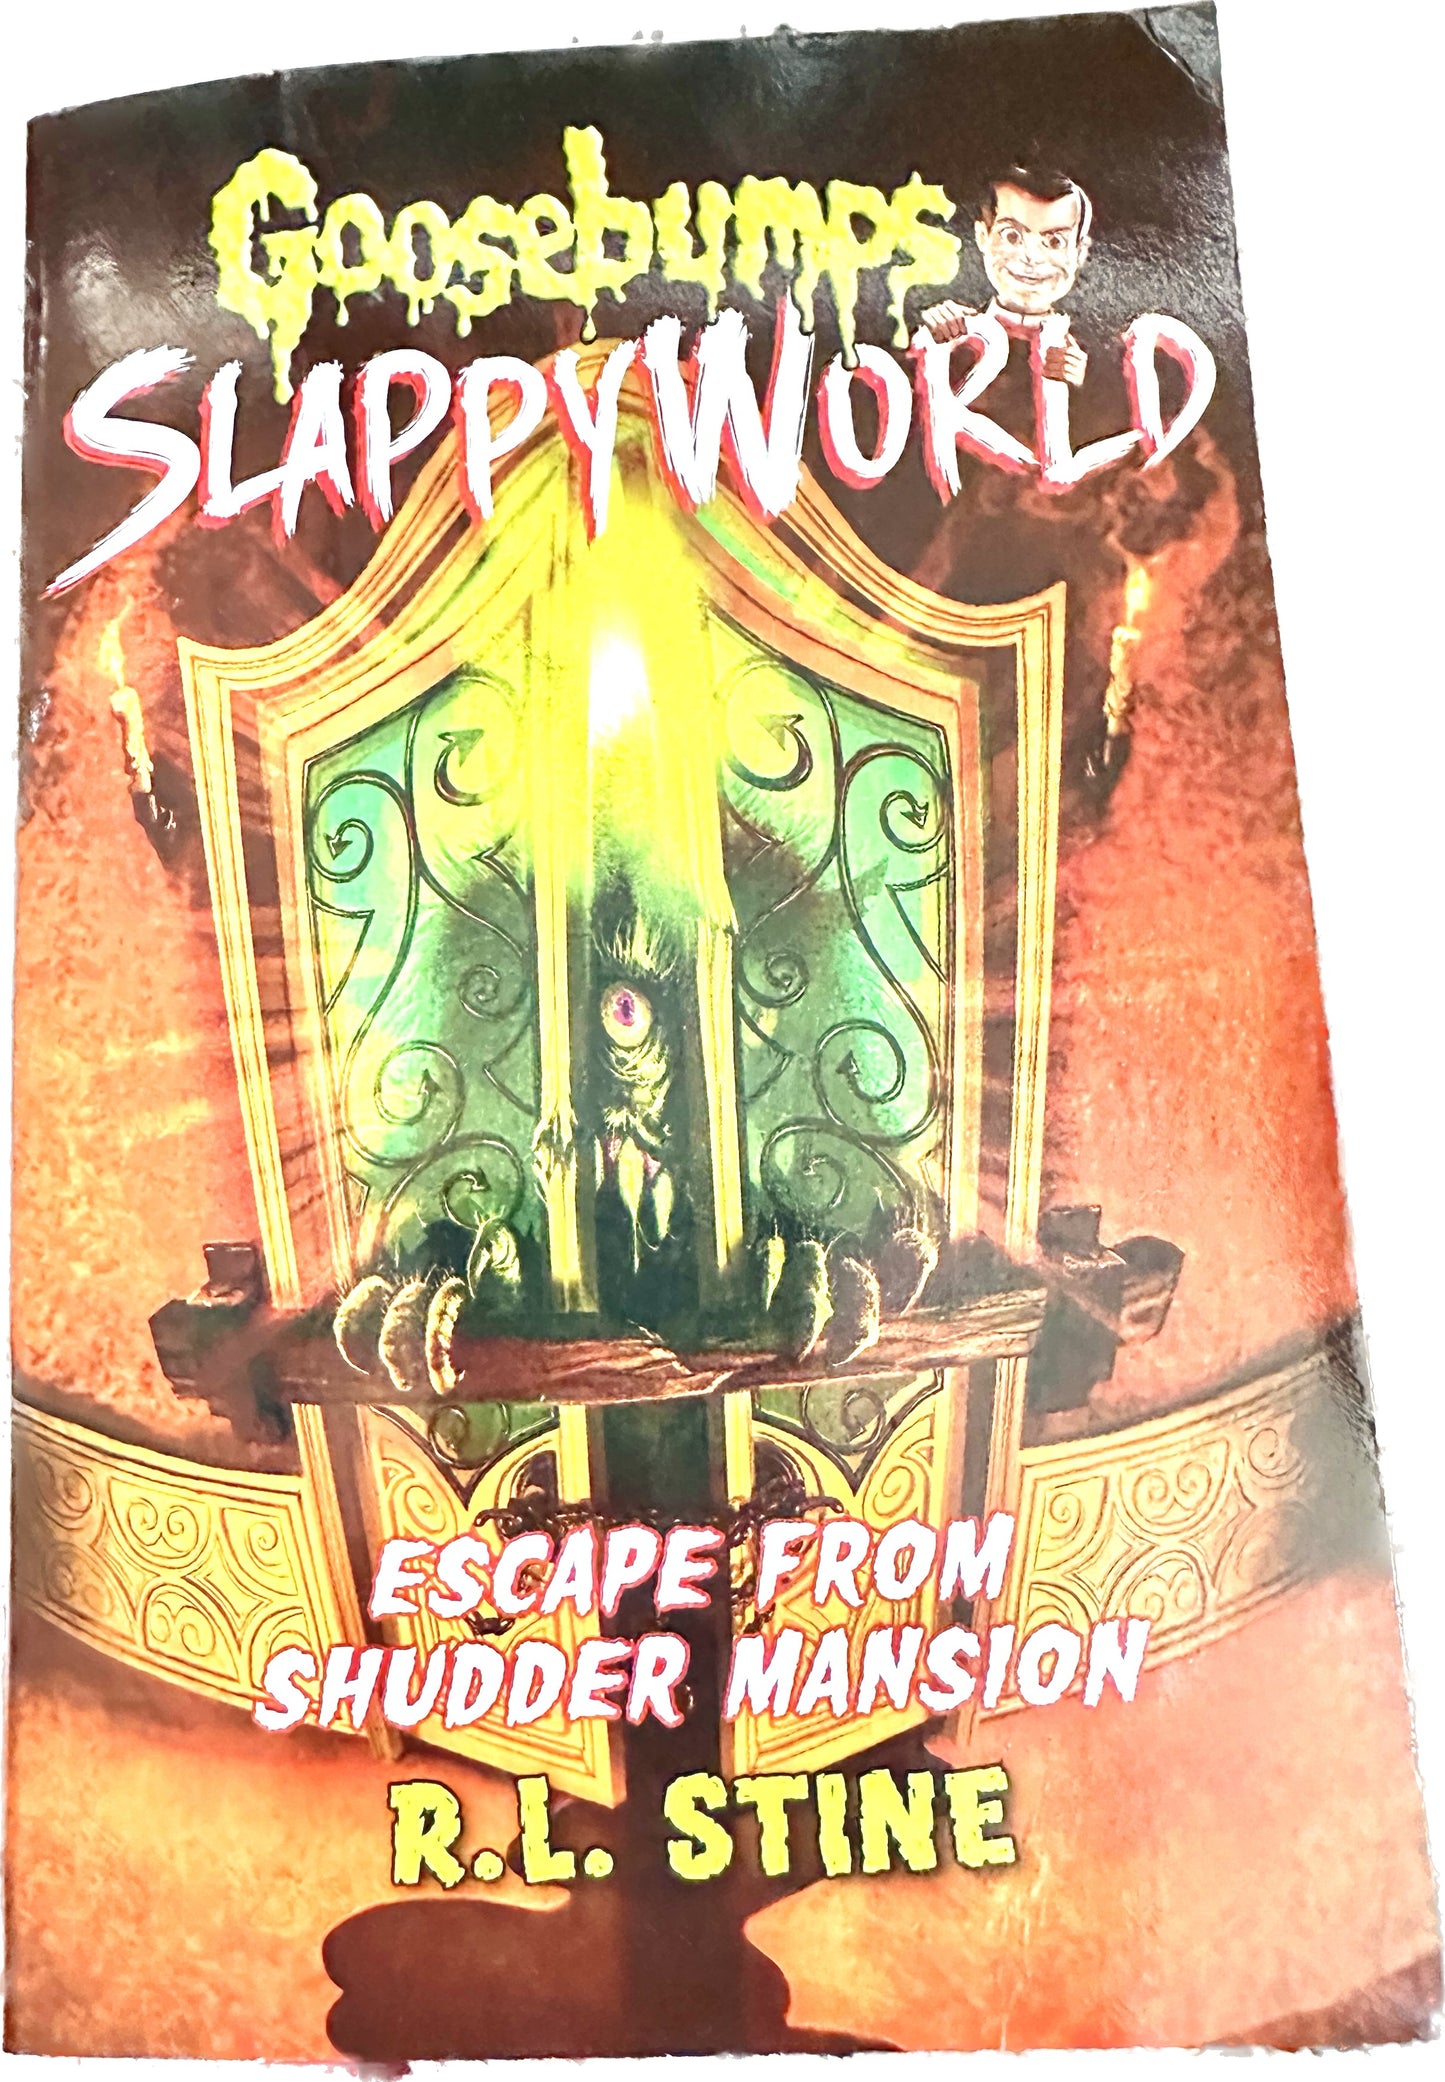 GOOSEBUMPS SLAPPY WORLD: Escape From the shudder Mansion rl stine .